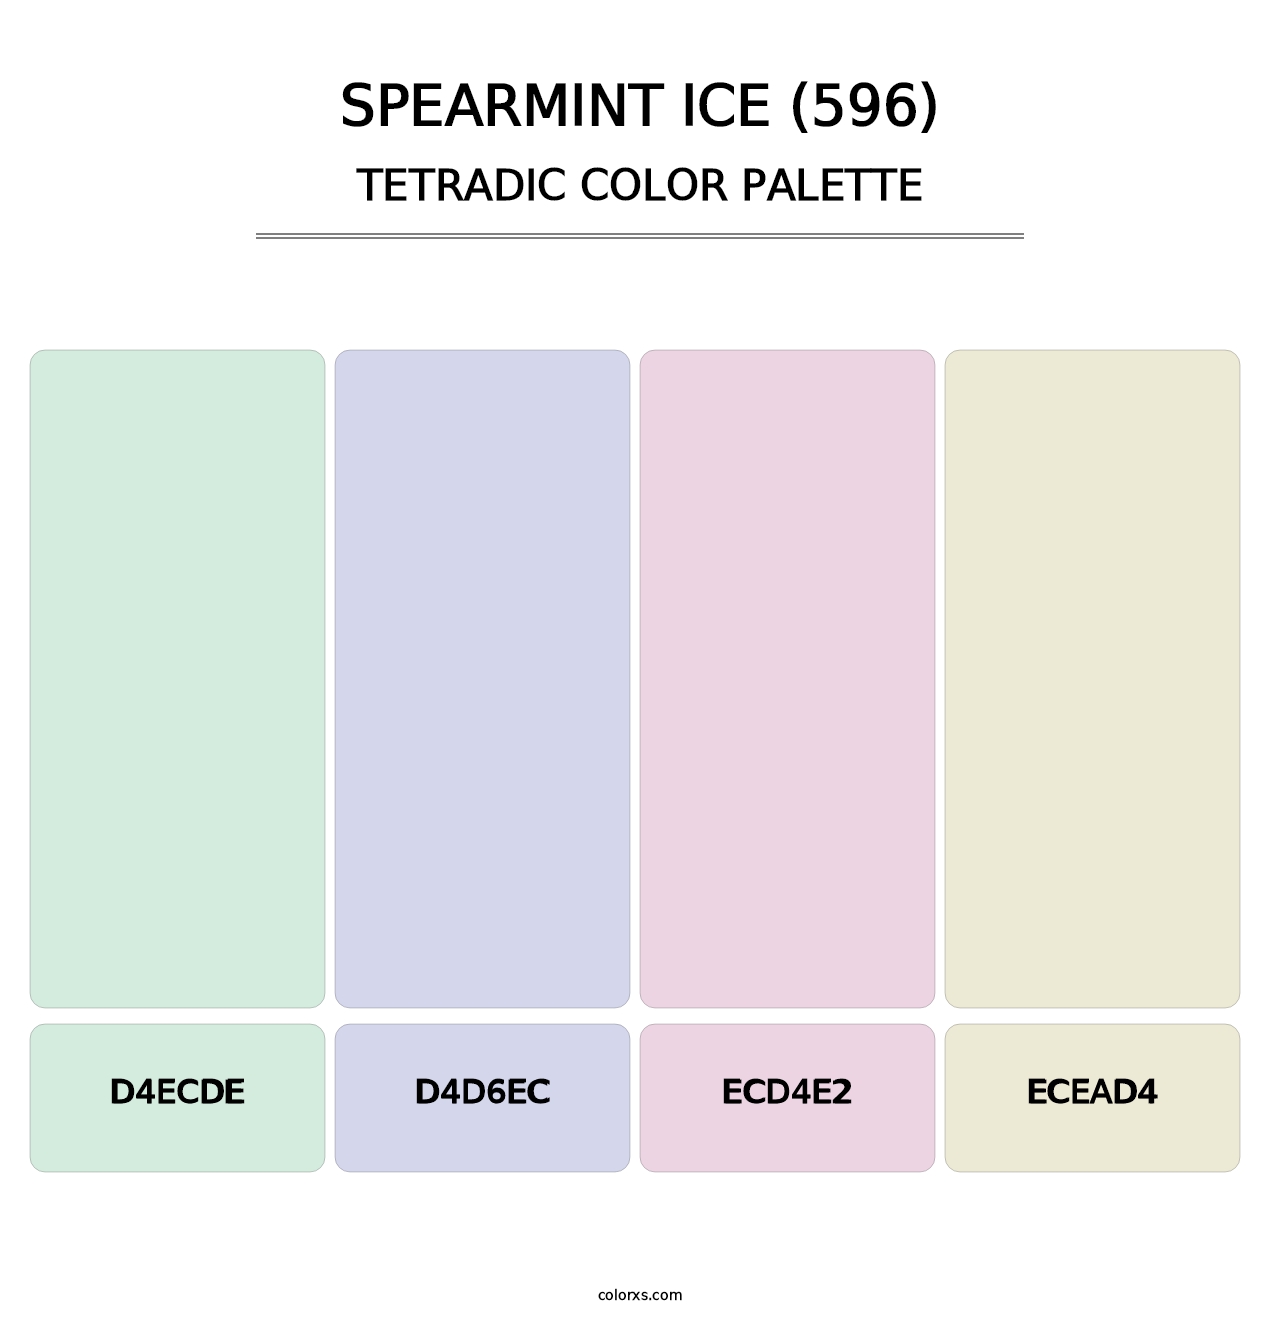 Spearmint Ice (596) - Tetradic Color Palette